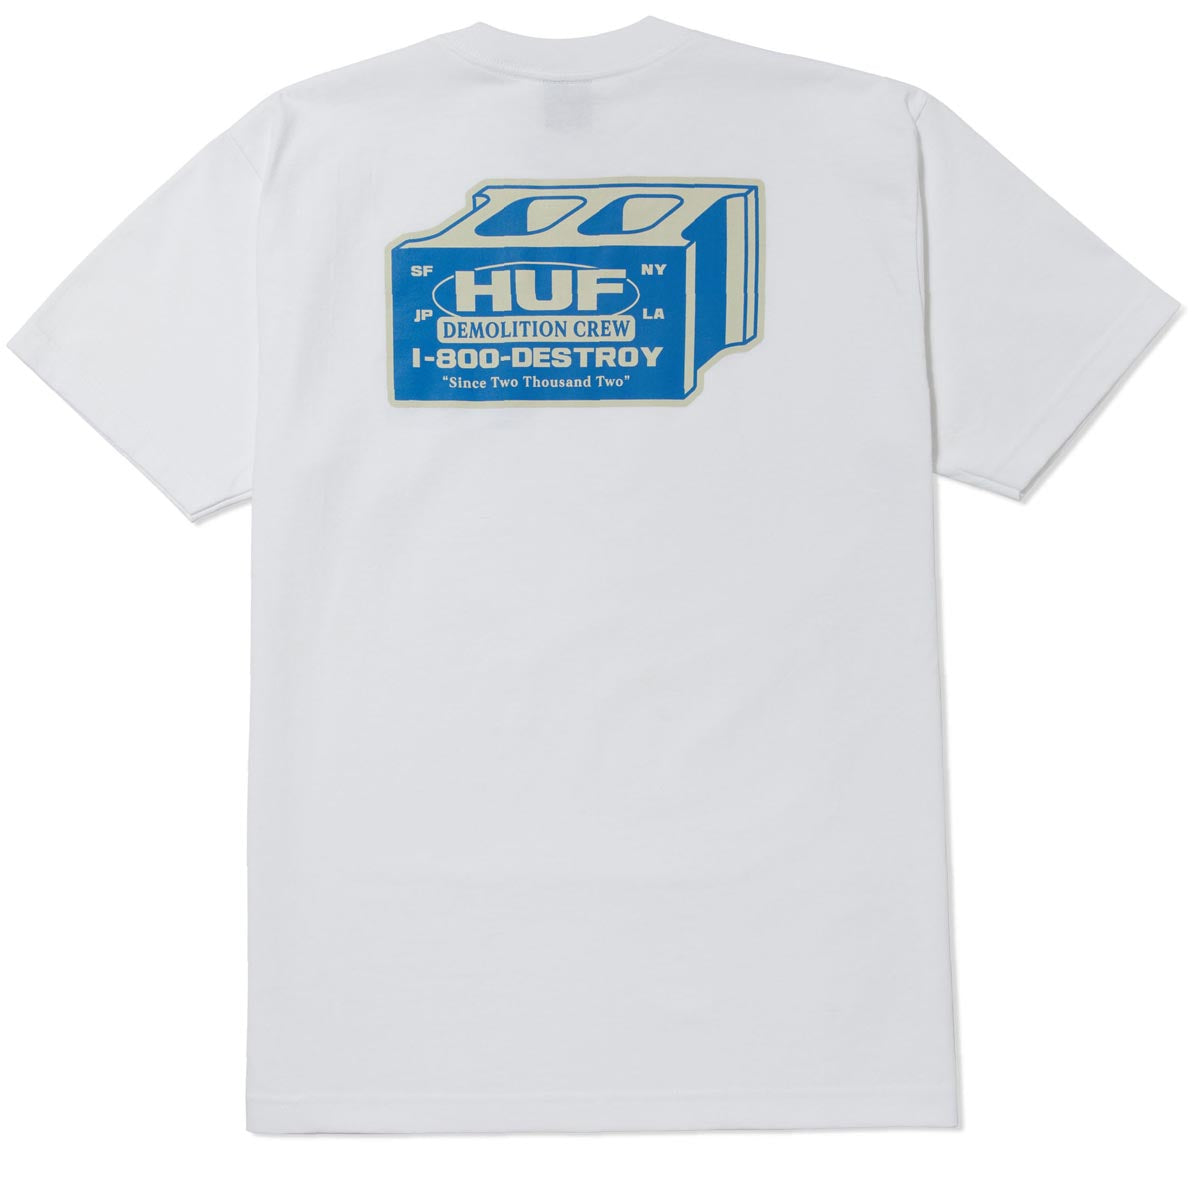 HUF Demolition Crew T-Shirt - White image 1